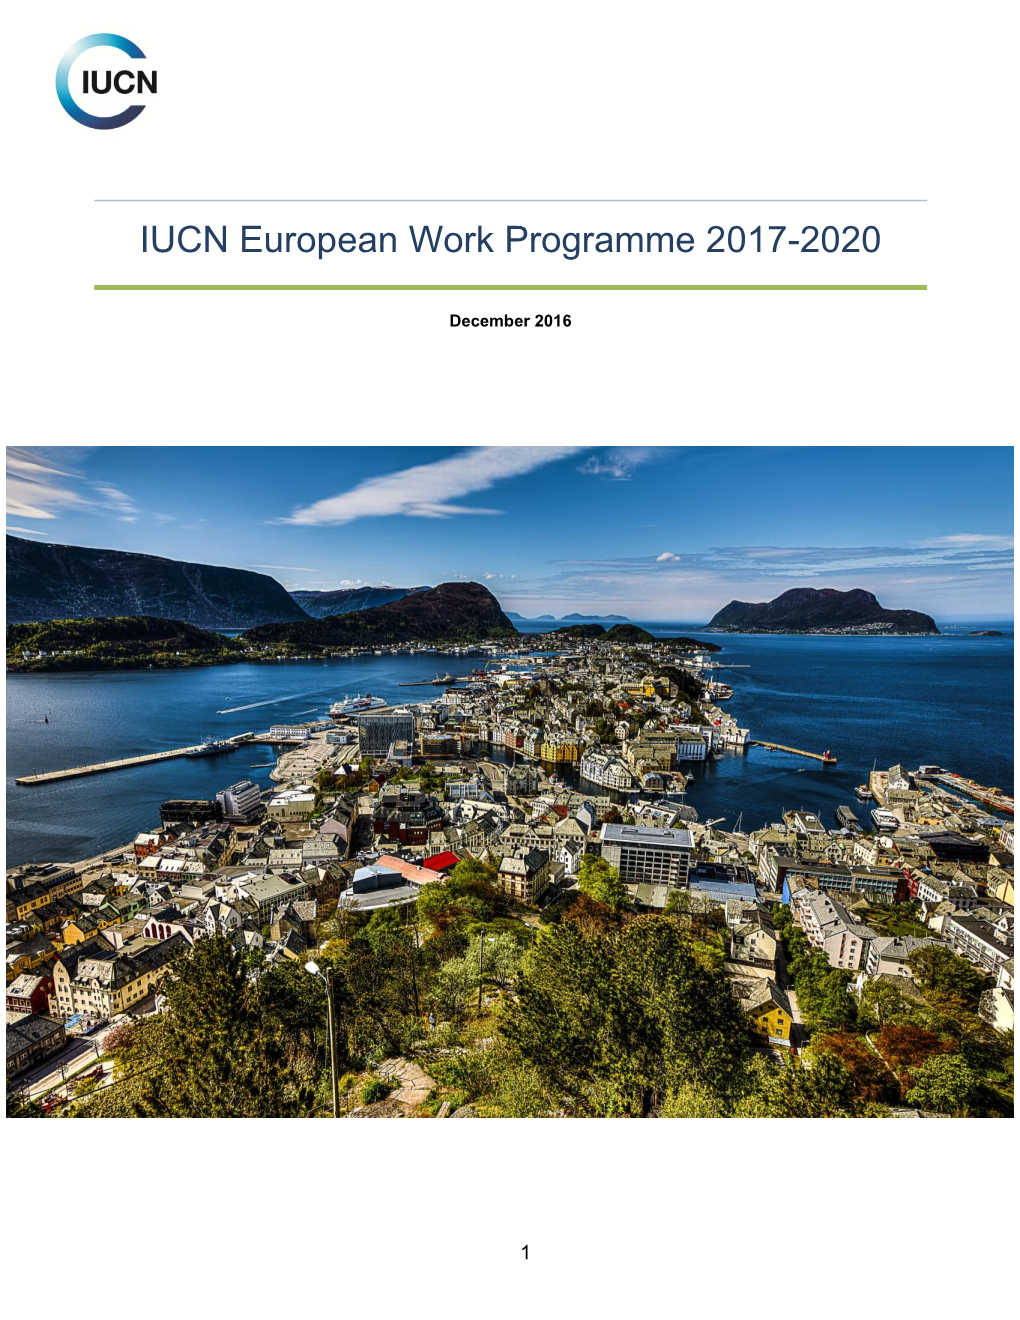 IUCN European Programme 2009-2012